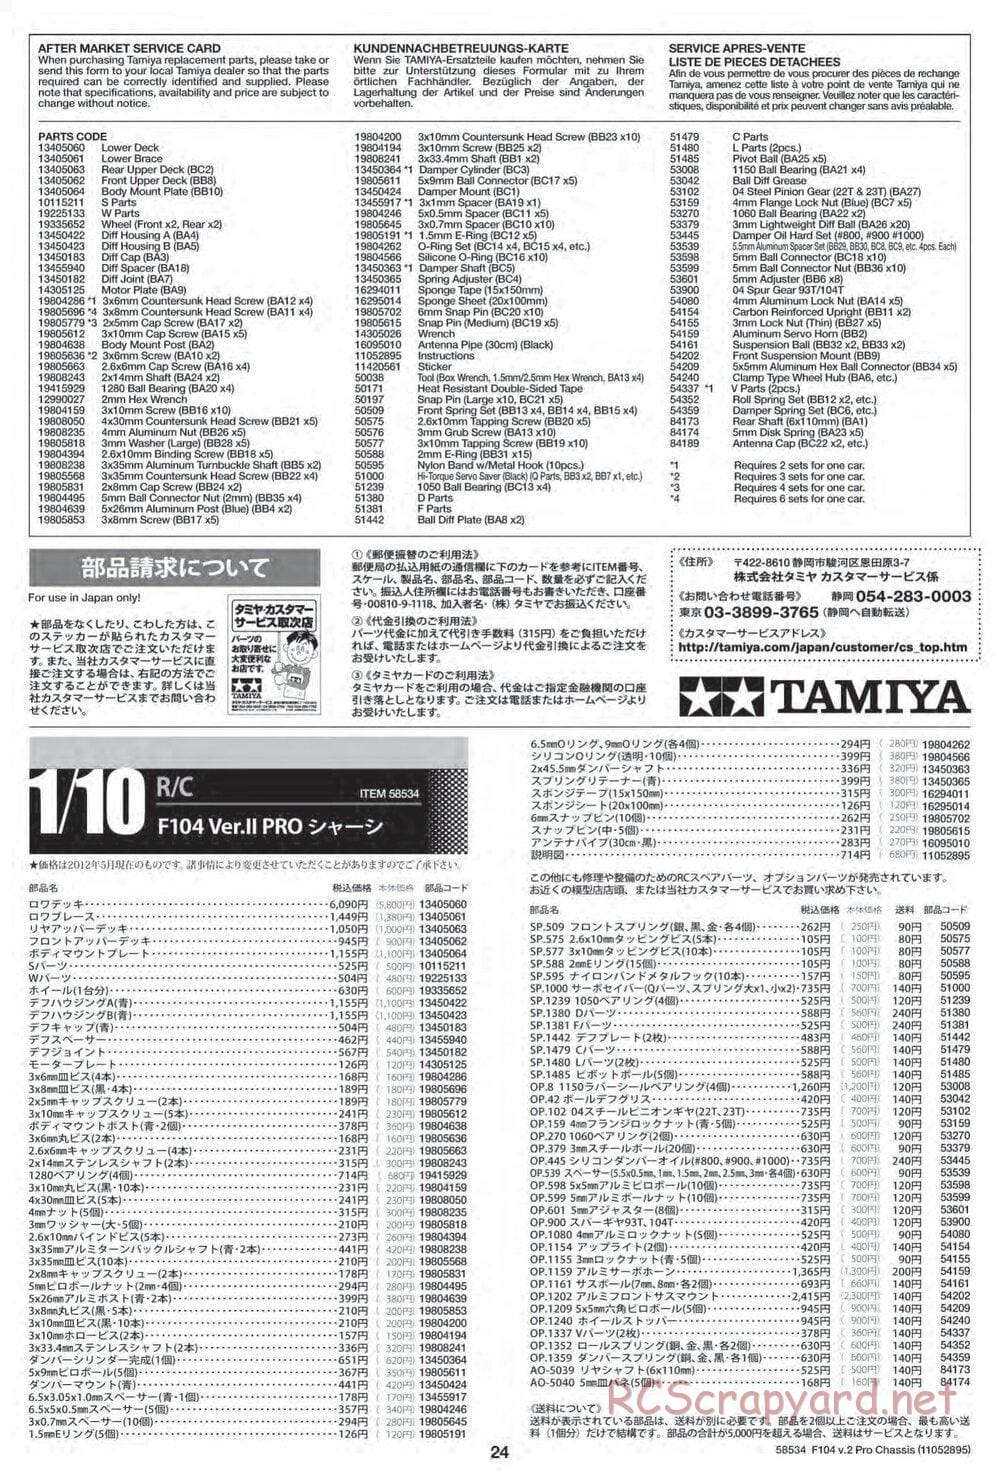 Tamiya - F104 Ver.II PRO Chassis - Manual - Page 24